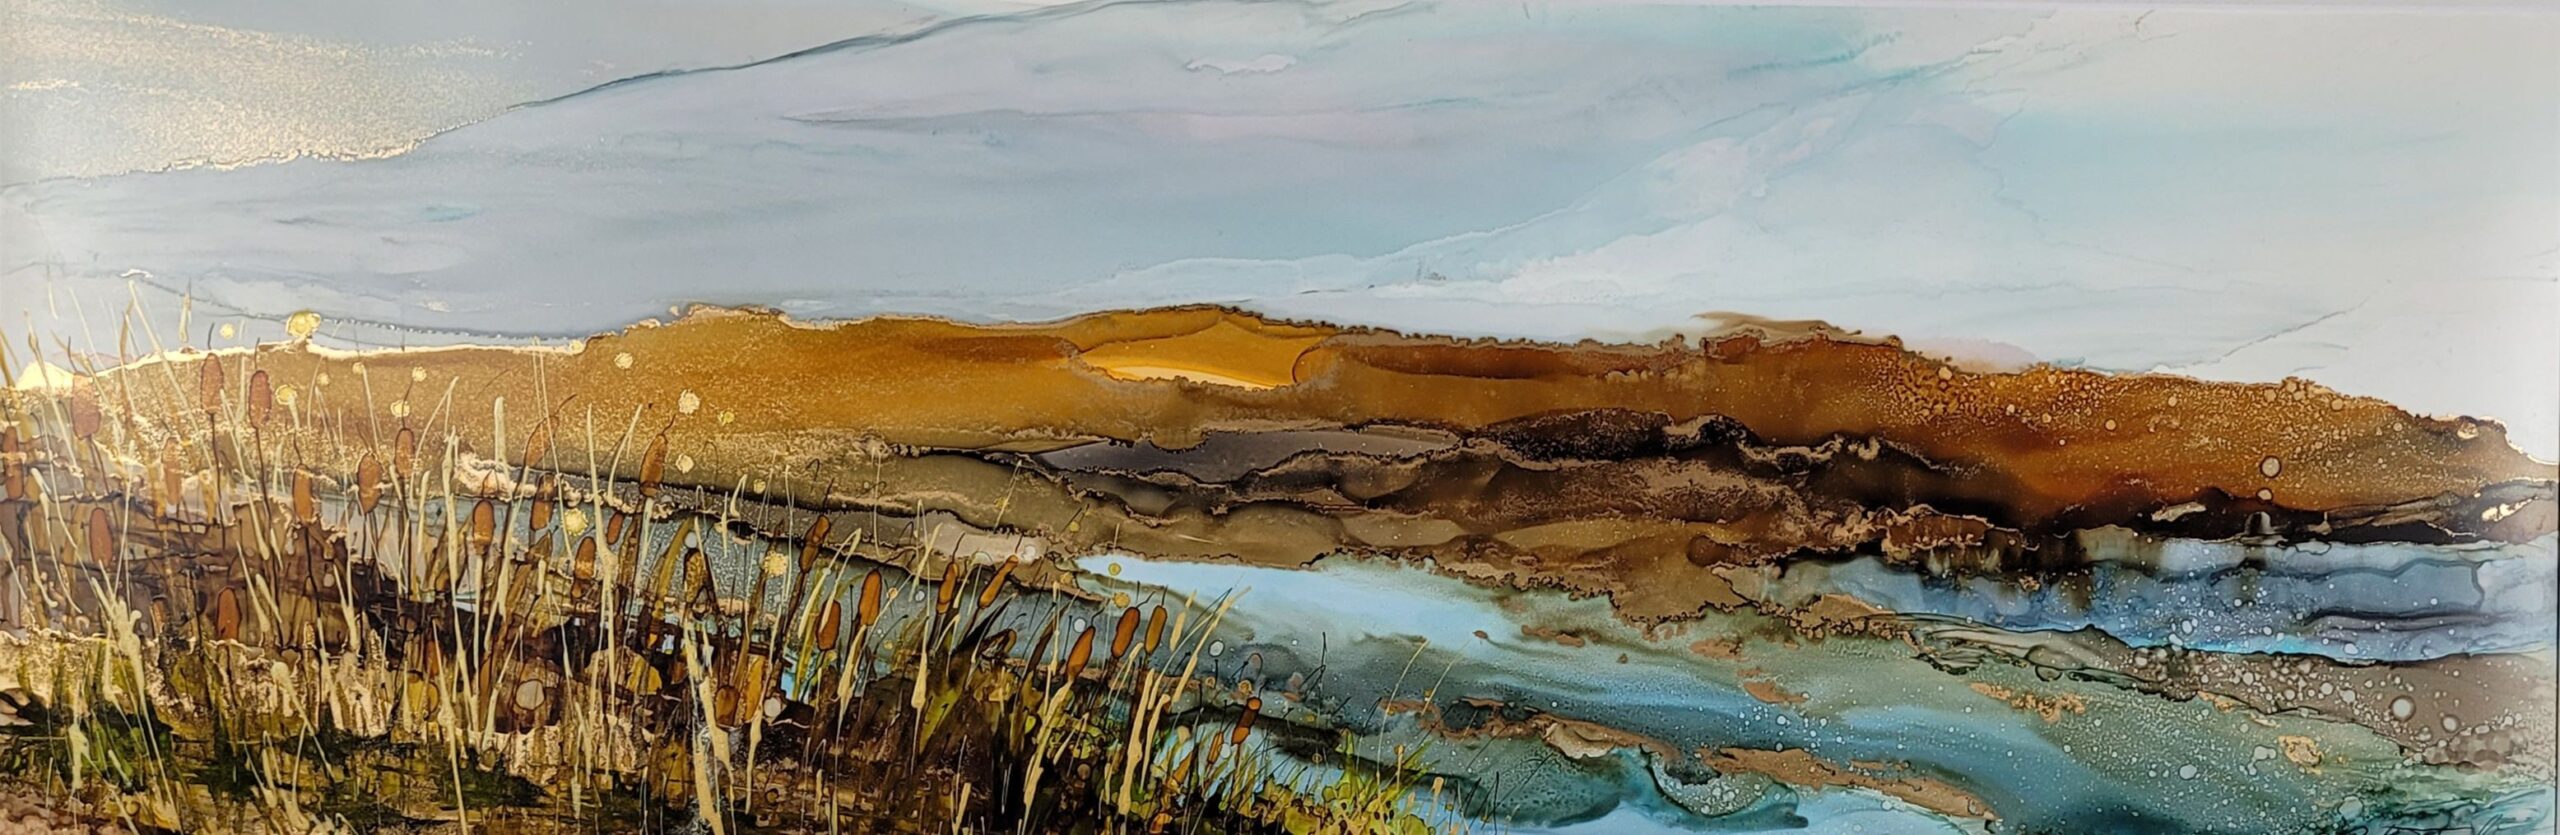 Joyous Morning, original alcohol ink landscape painting by Paulina Tokarski | Effusion Art Gallery + Cast Glass Studio, Invermere BC